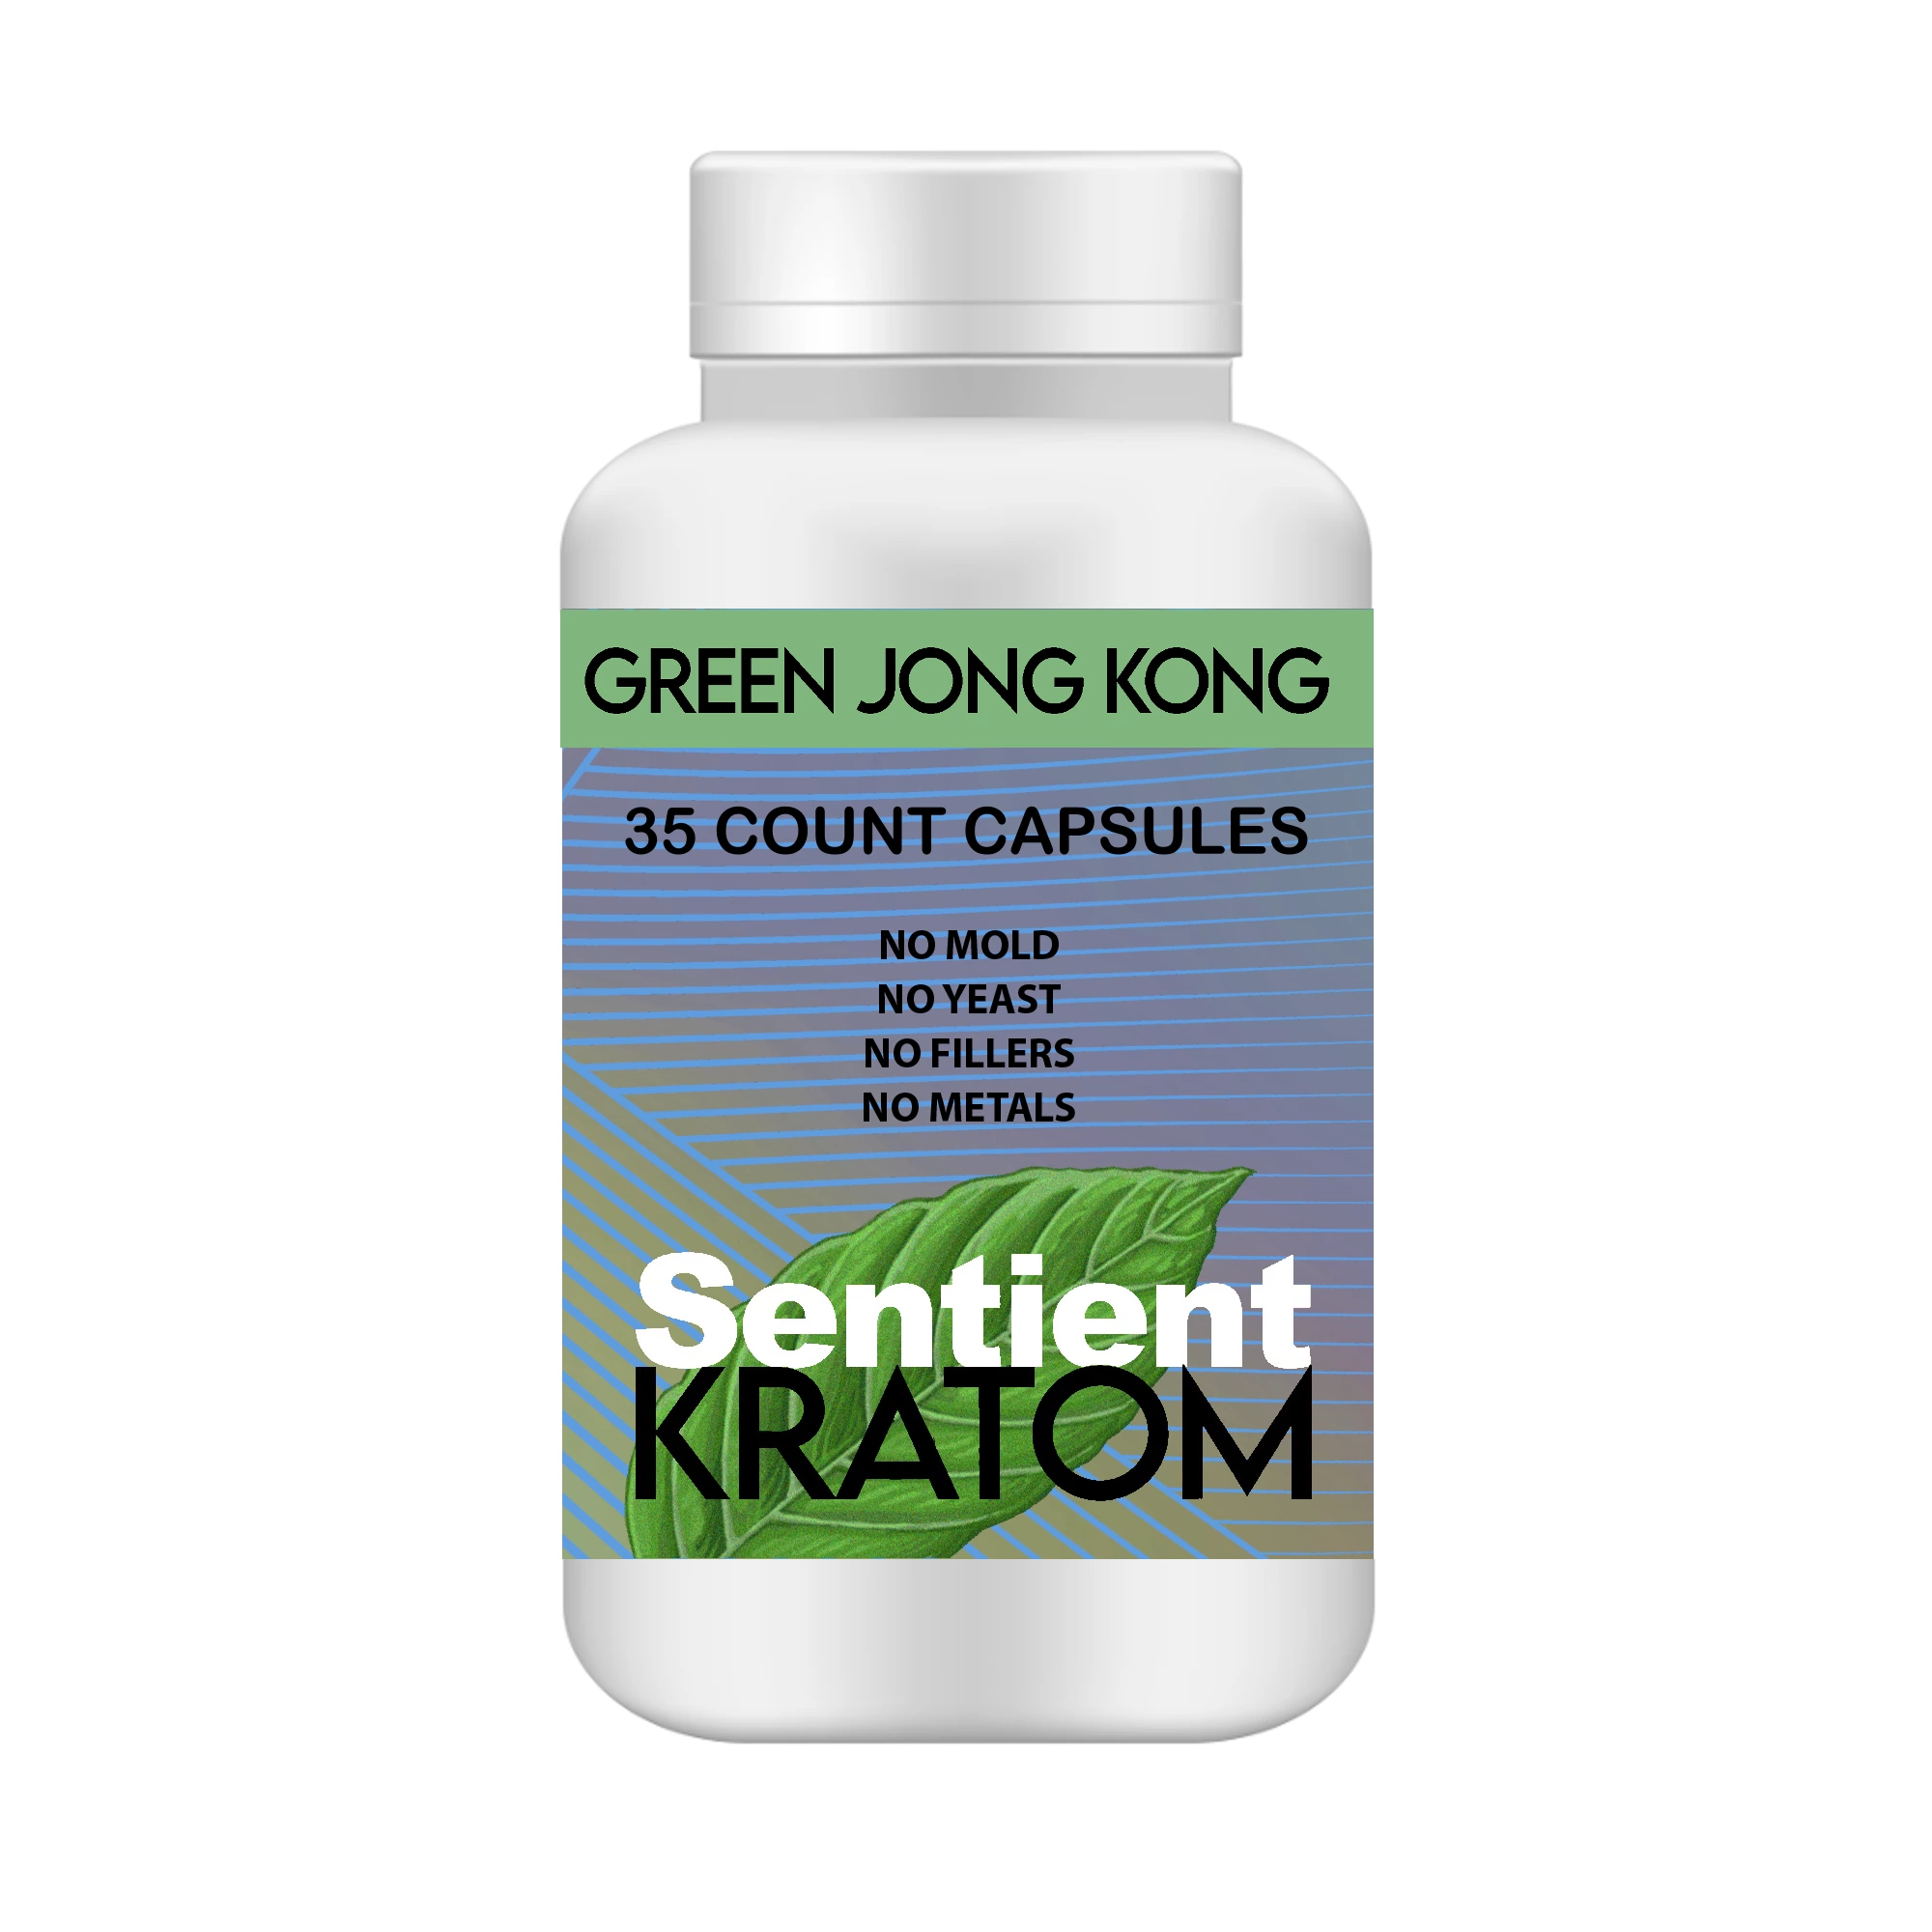 Green Jong Kong Kratom 35ct